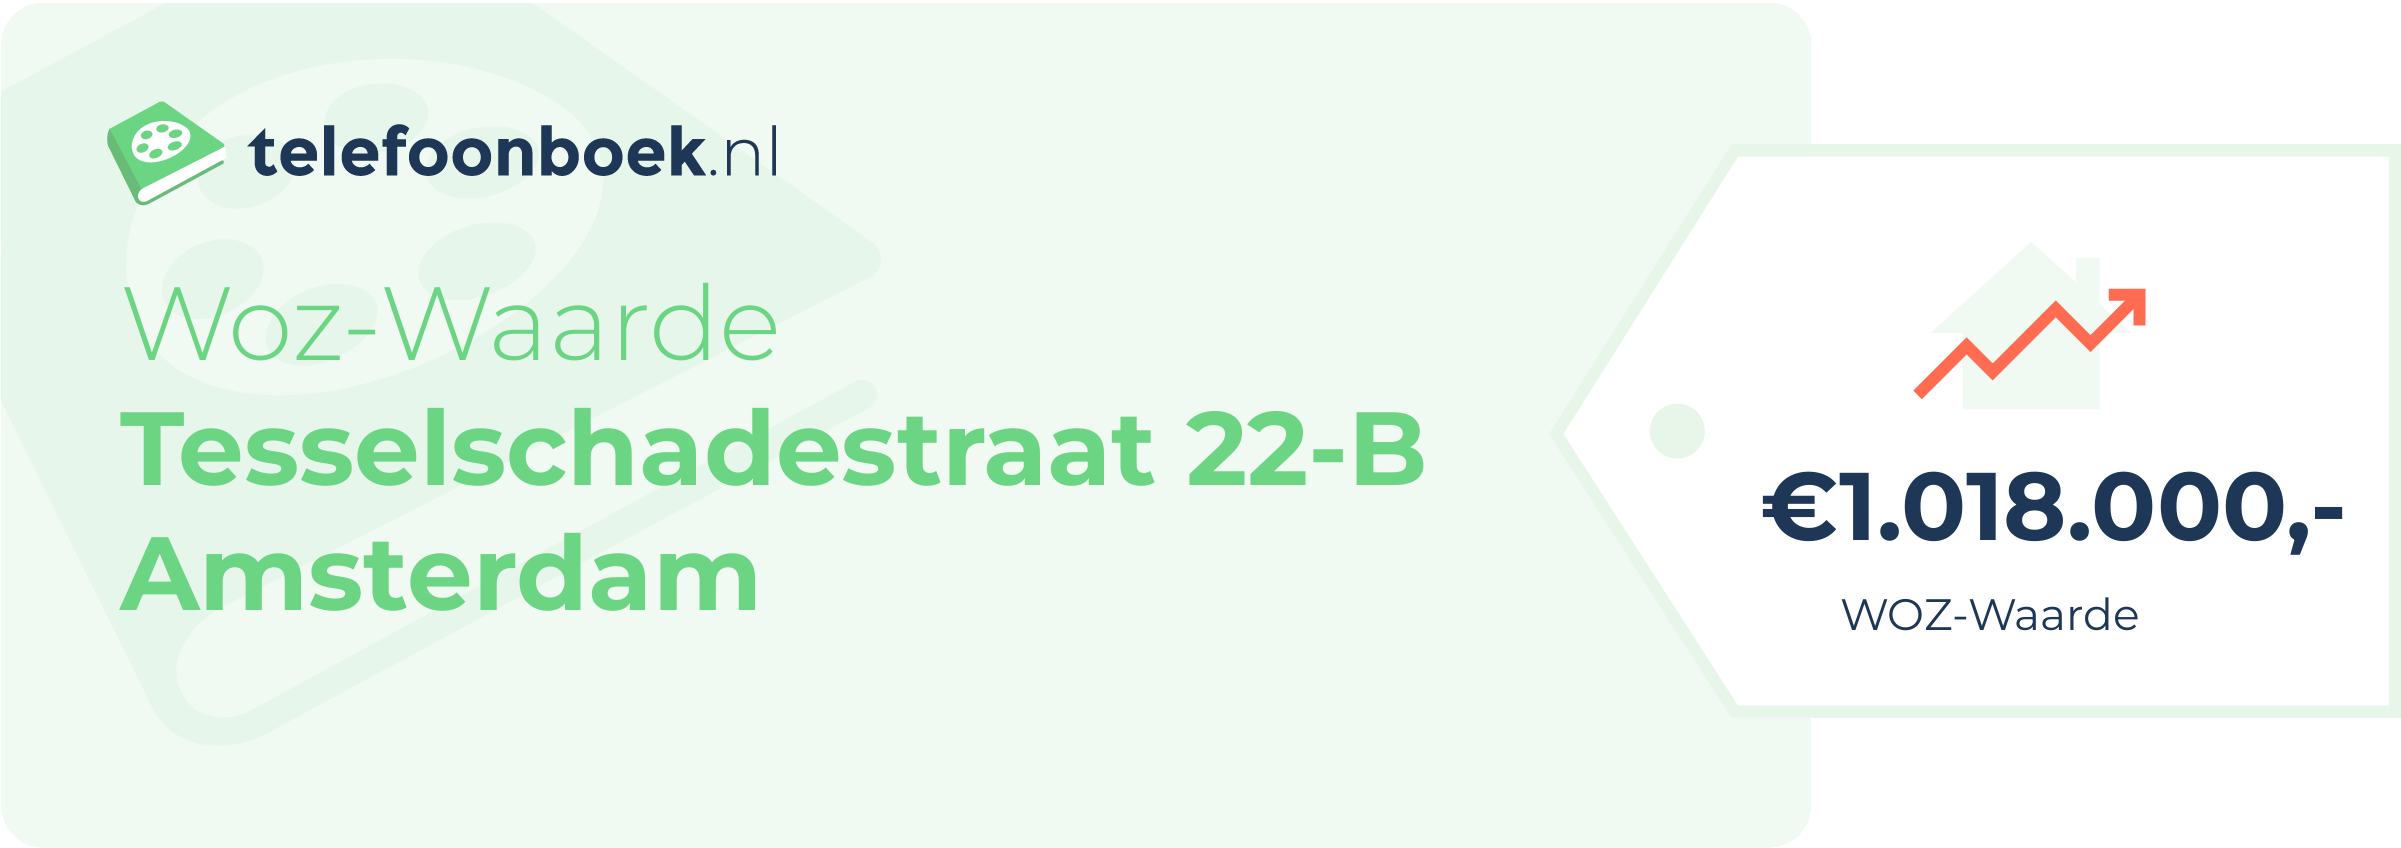 WOZ-waarde Tesselschadestraat 22-B Amsterdam